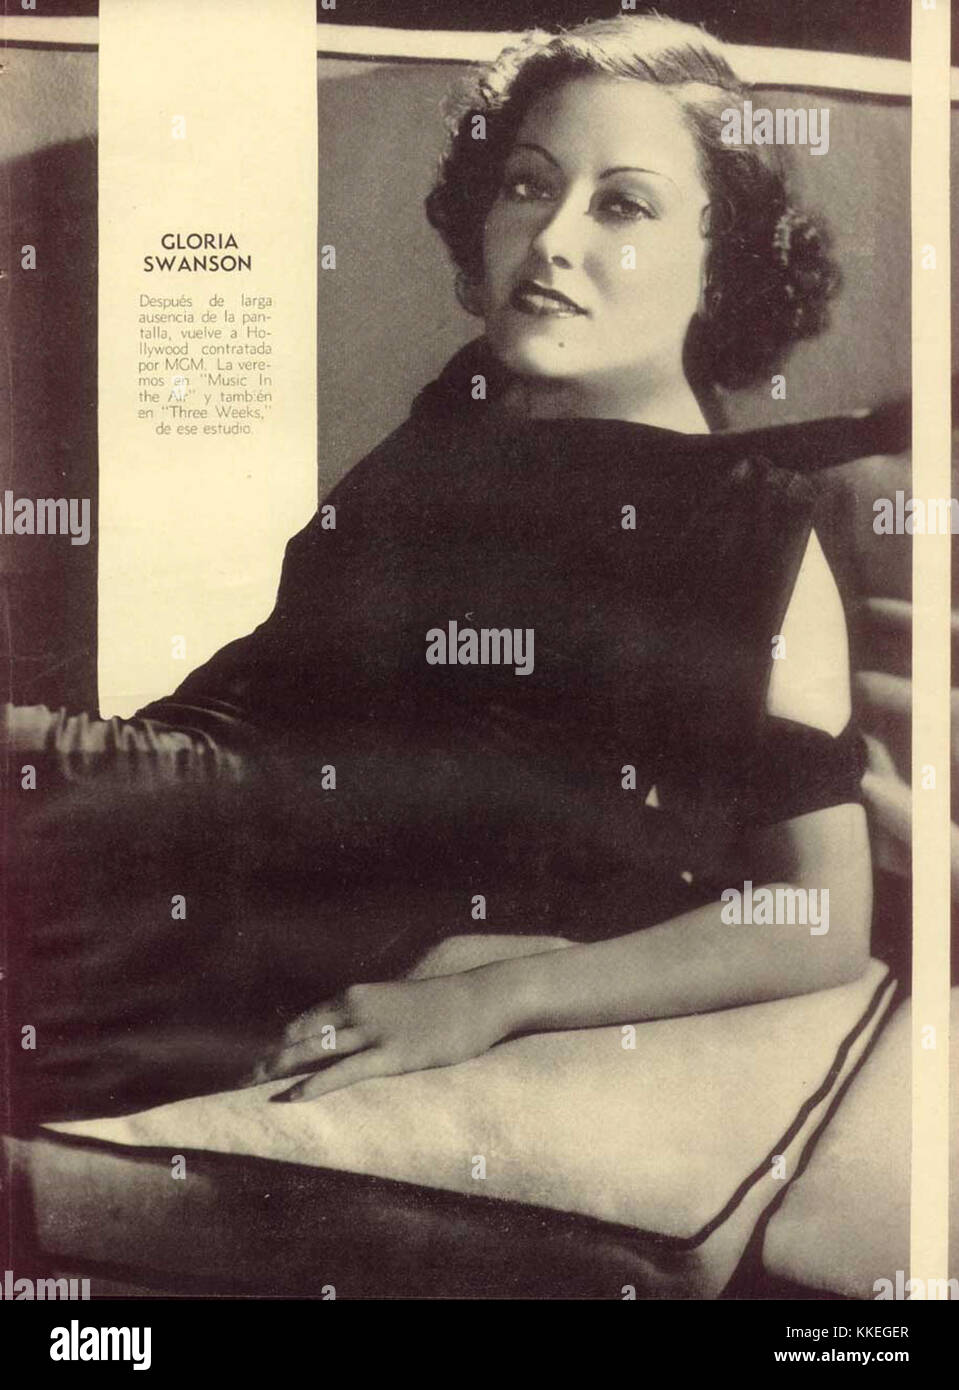 Gloria Swanson Revista Argentina AD Foto de stock